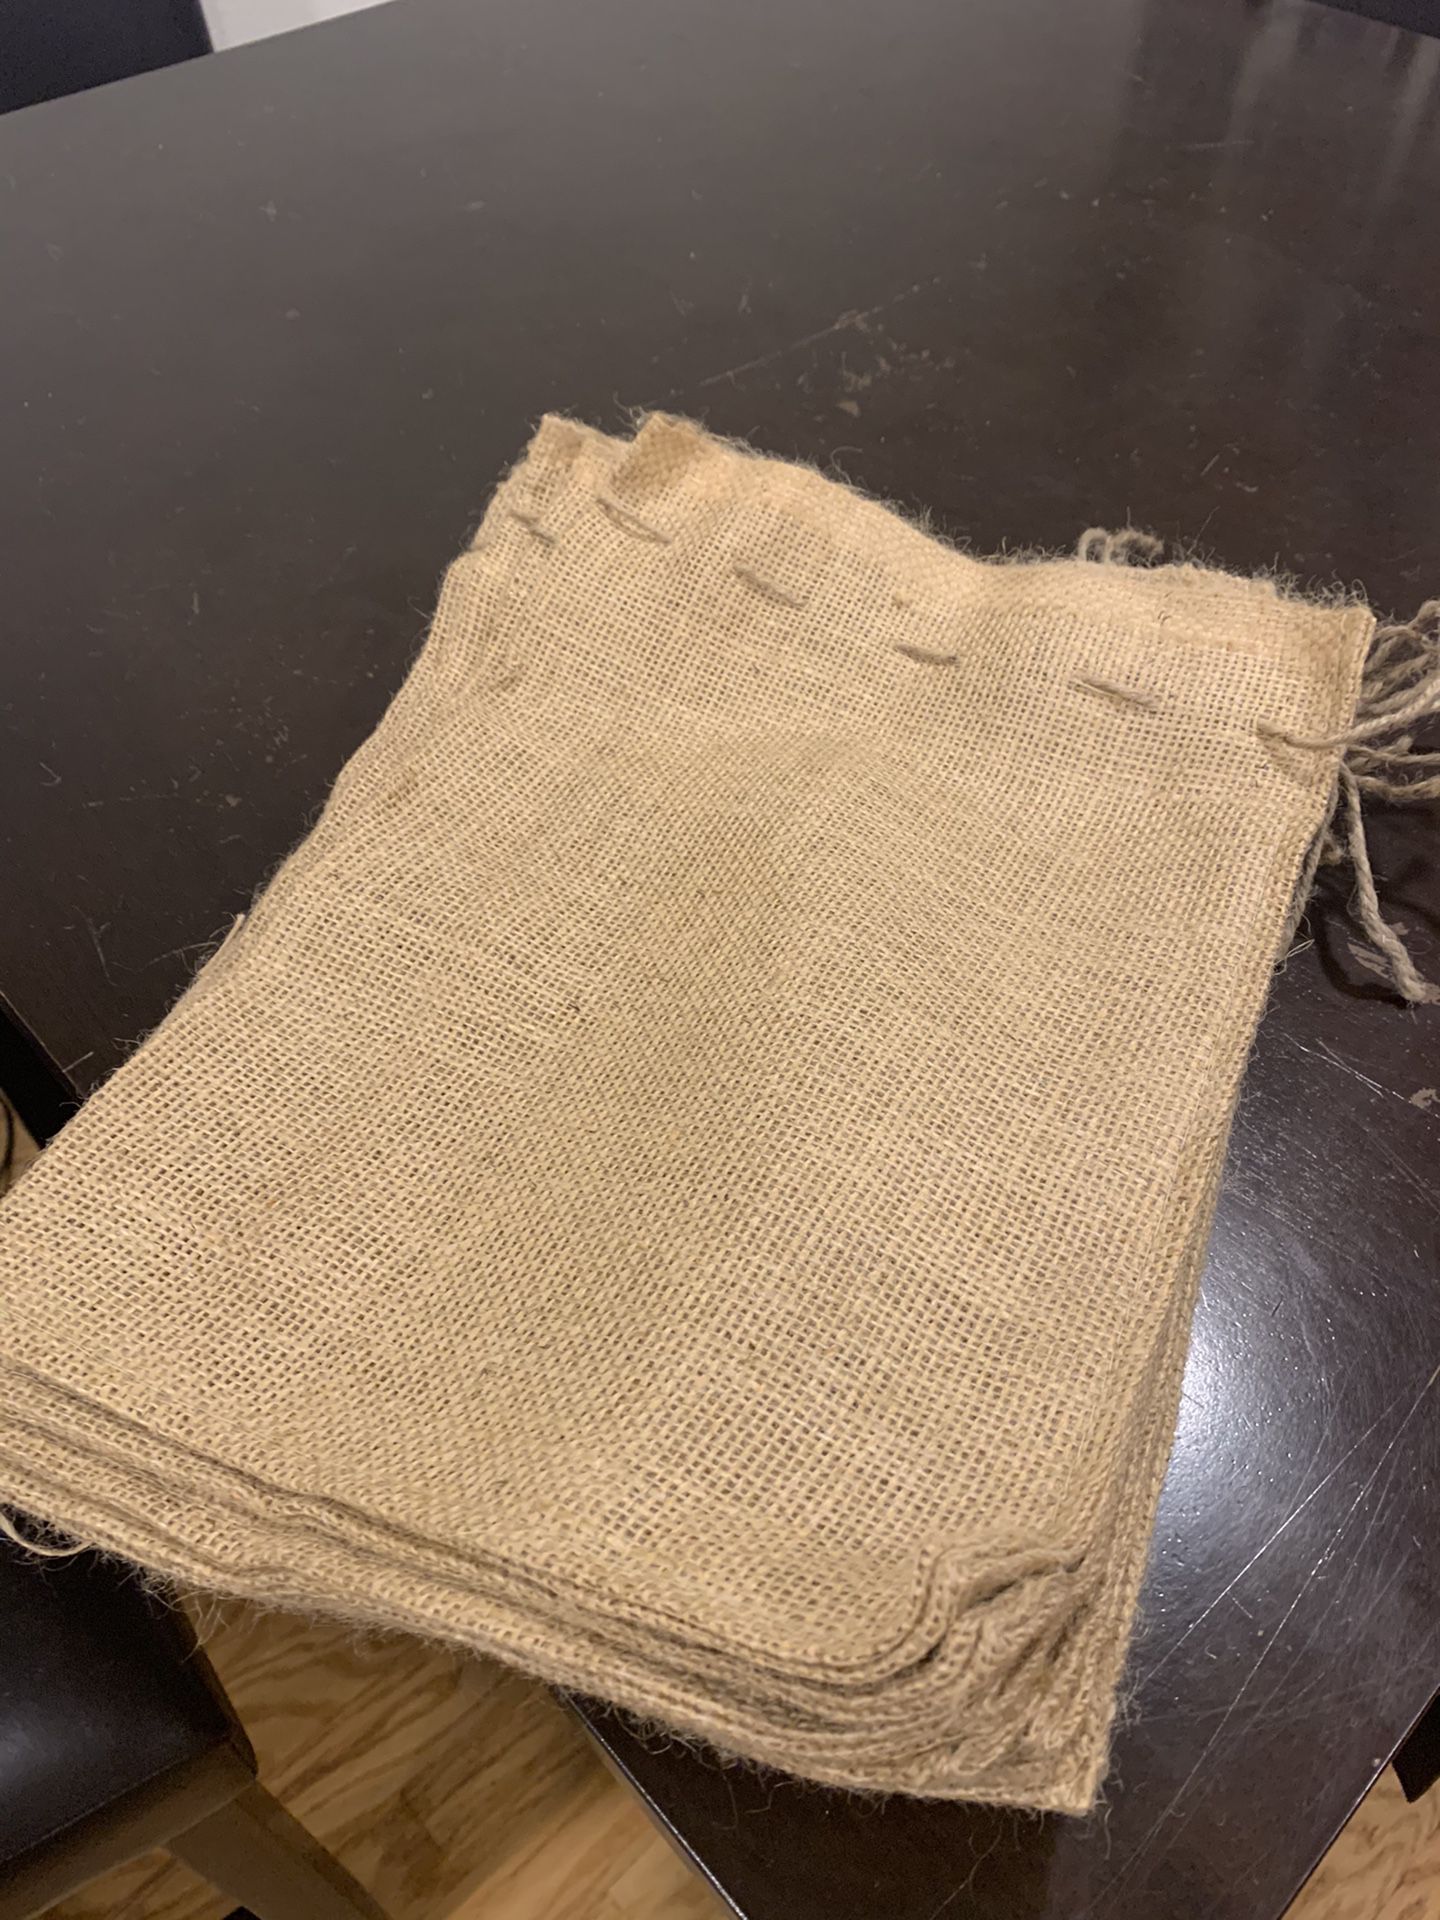 New / Unused Burlap Bag With Drawstrings